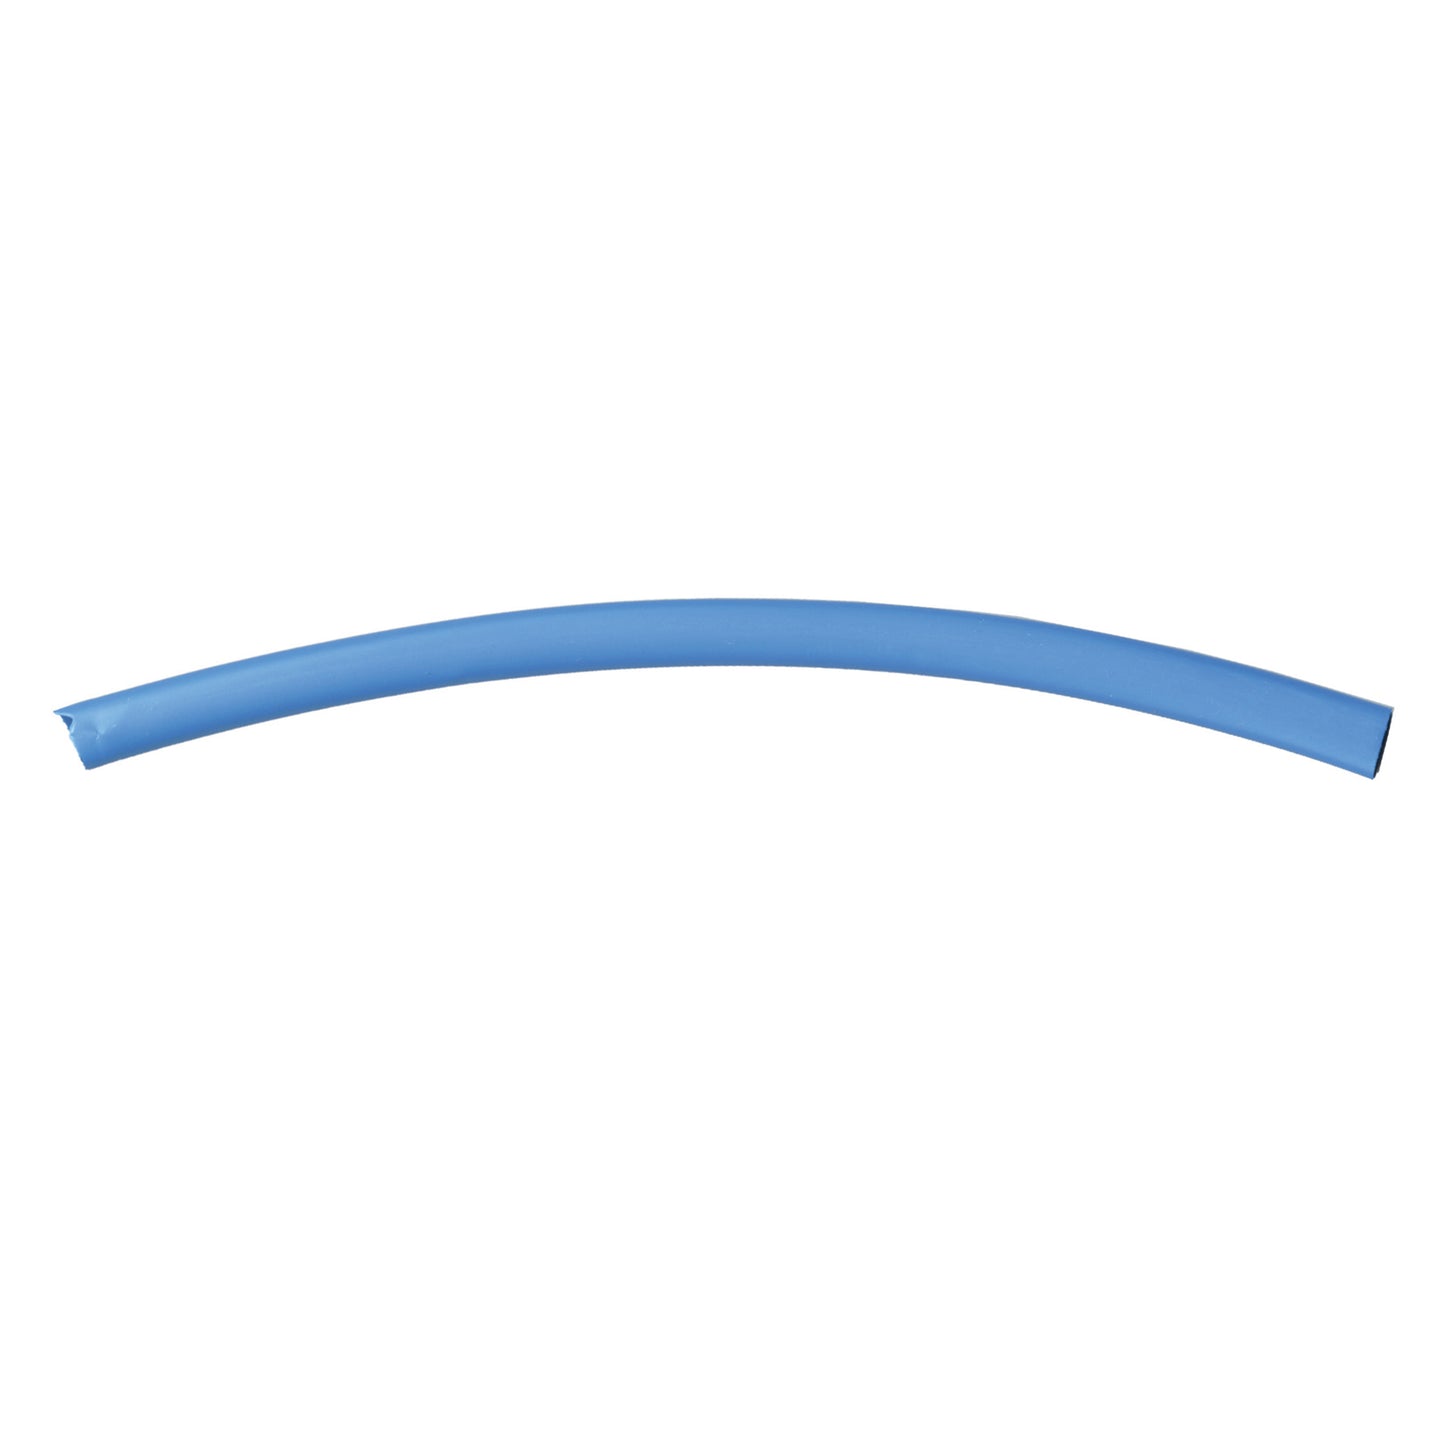 Flexible Thin Single Wall Non-Adhesive Heat Shrink Tubing 2:1 Blue 1/8" ID - 100' Ft Spool